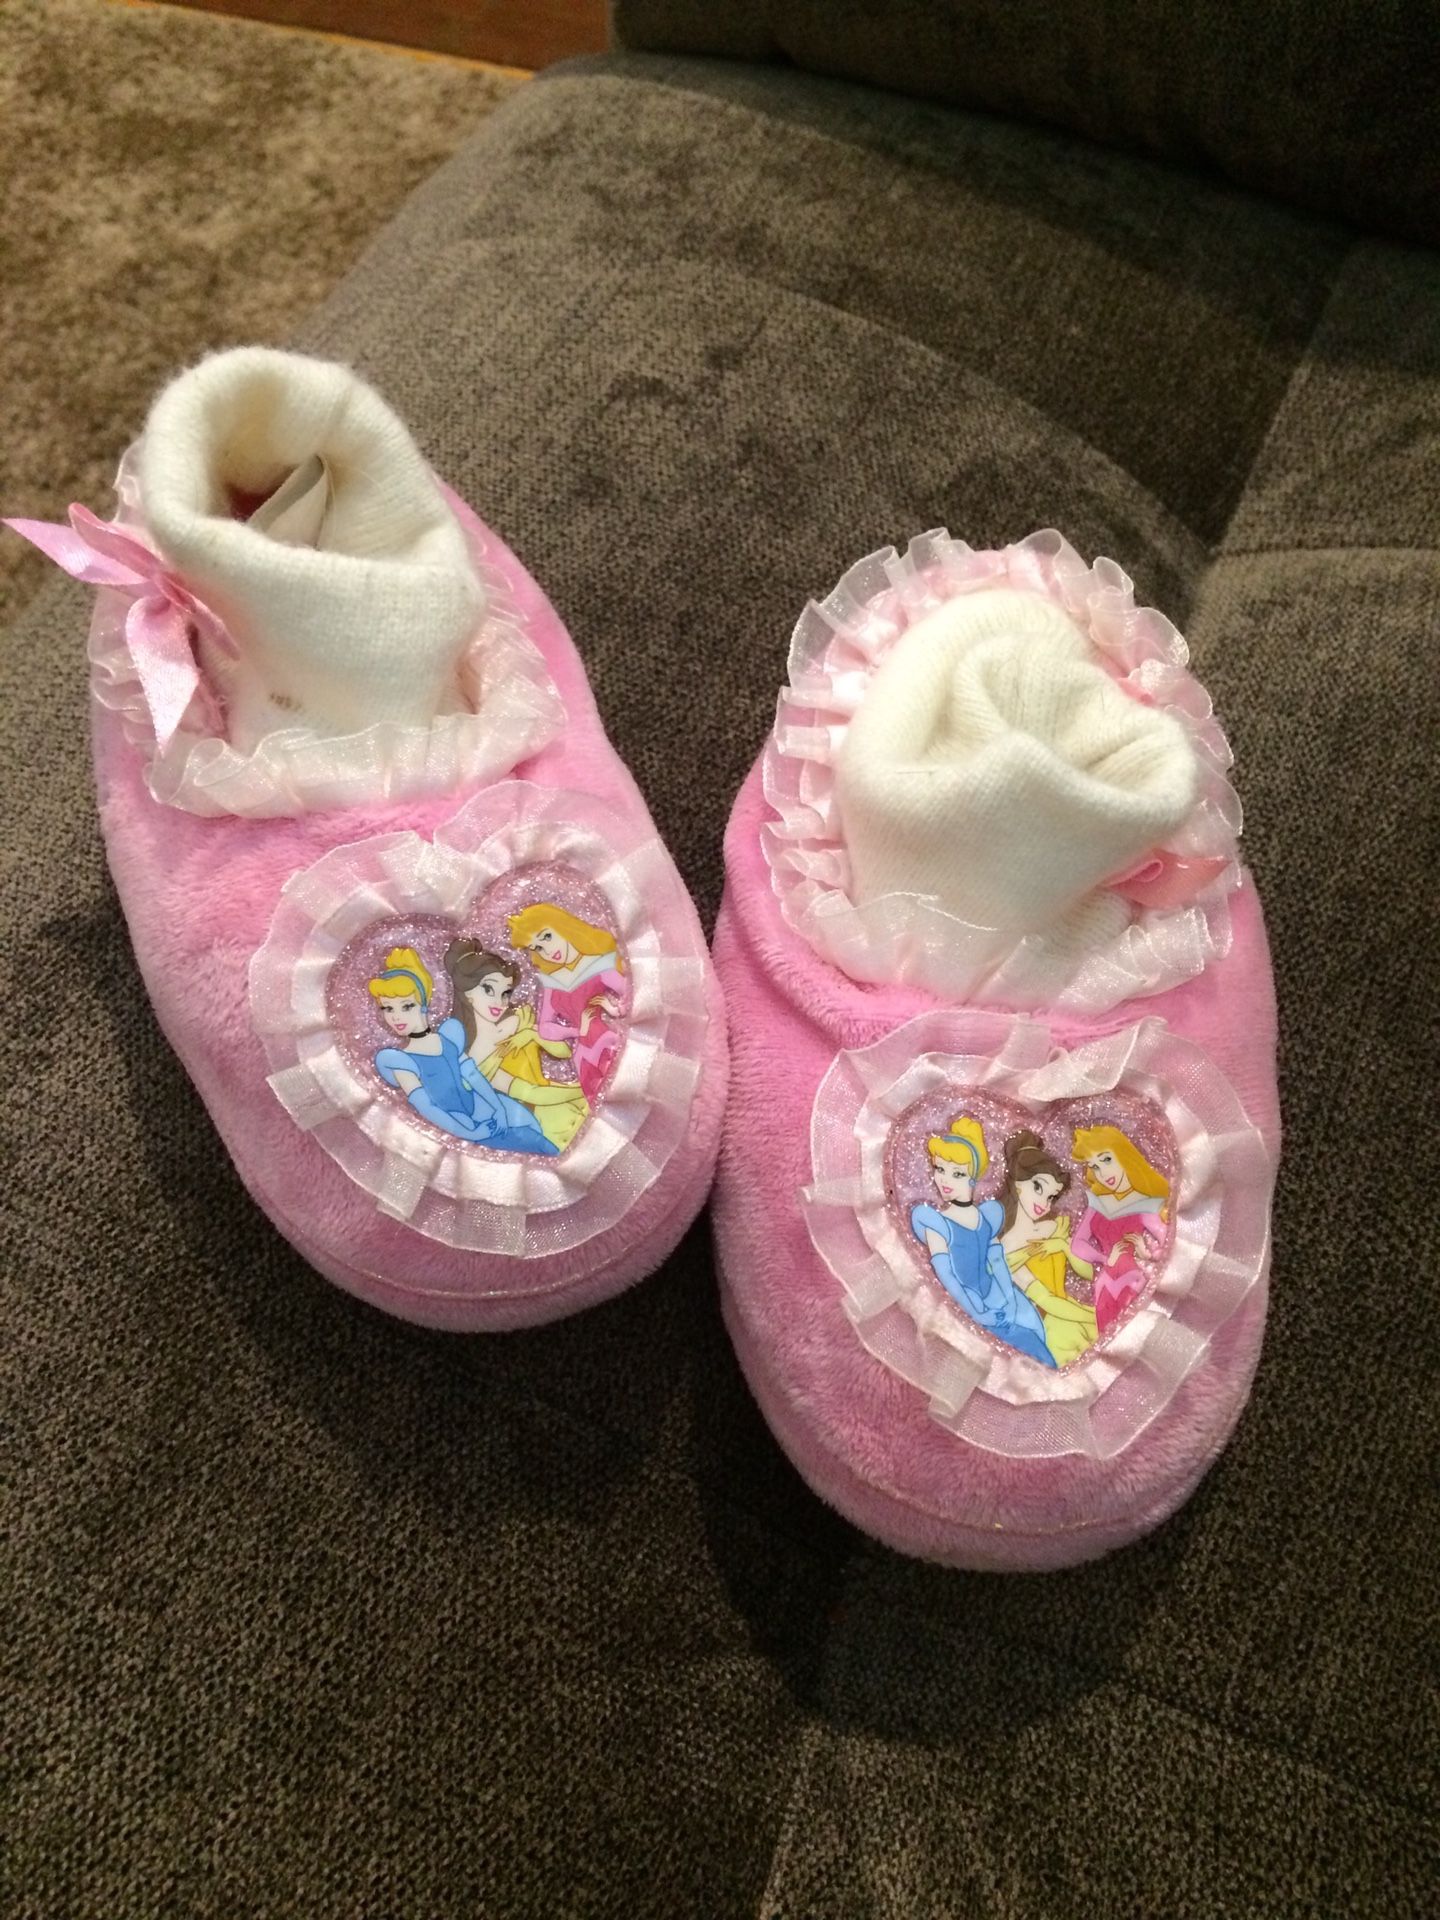 Princess slippers